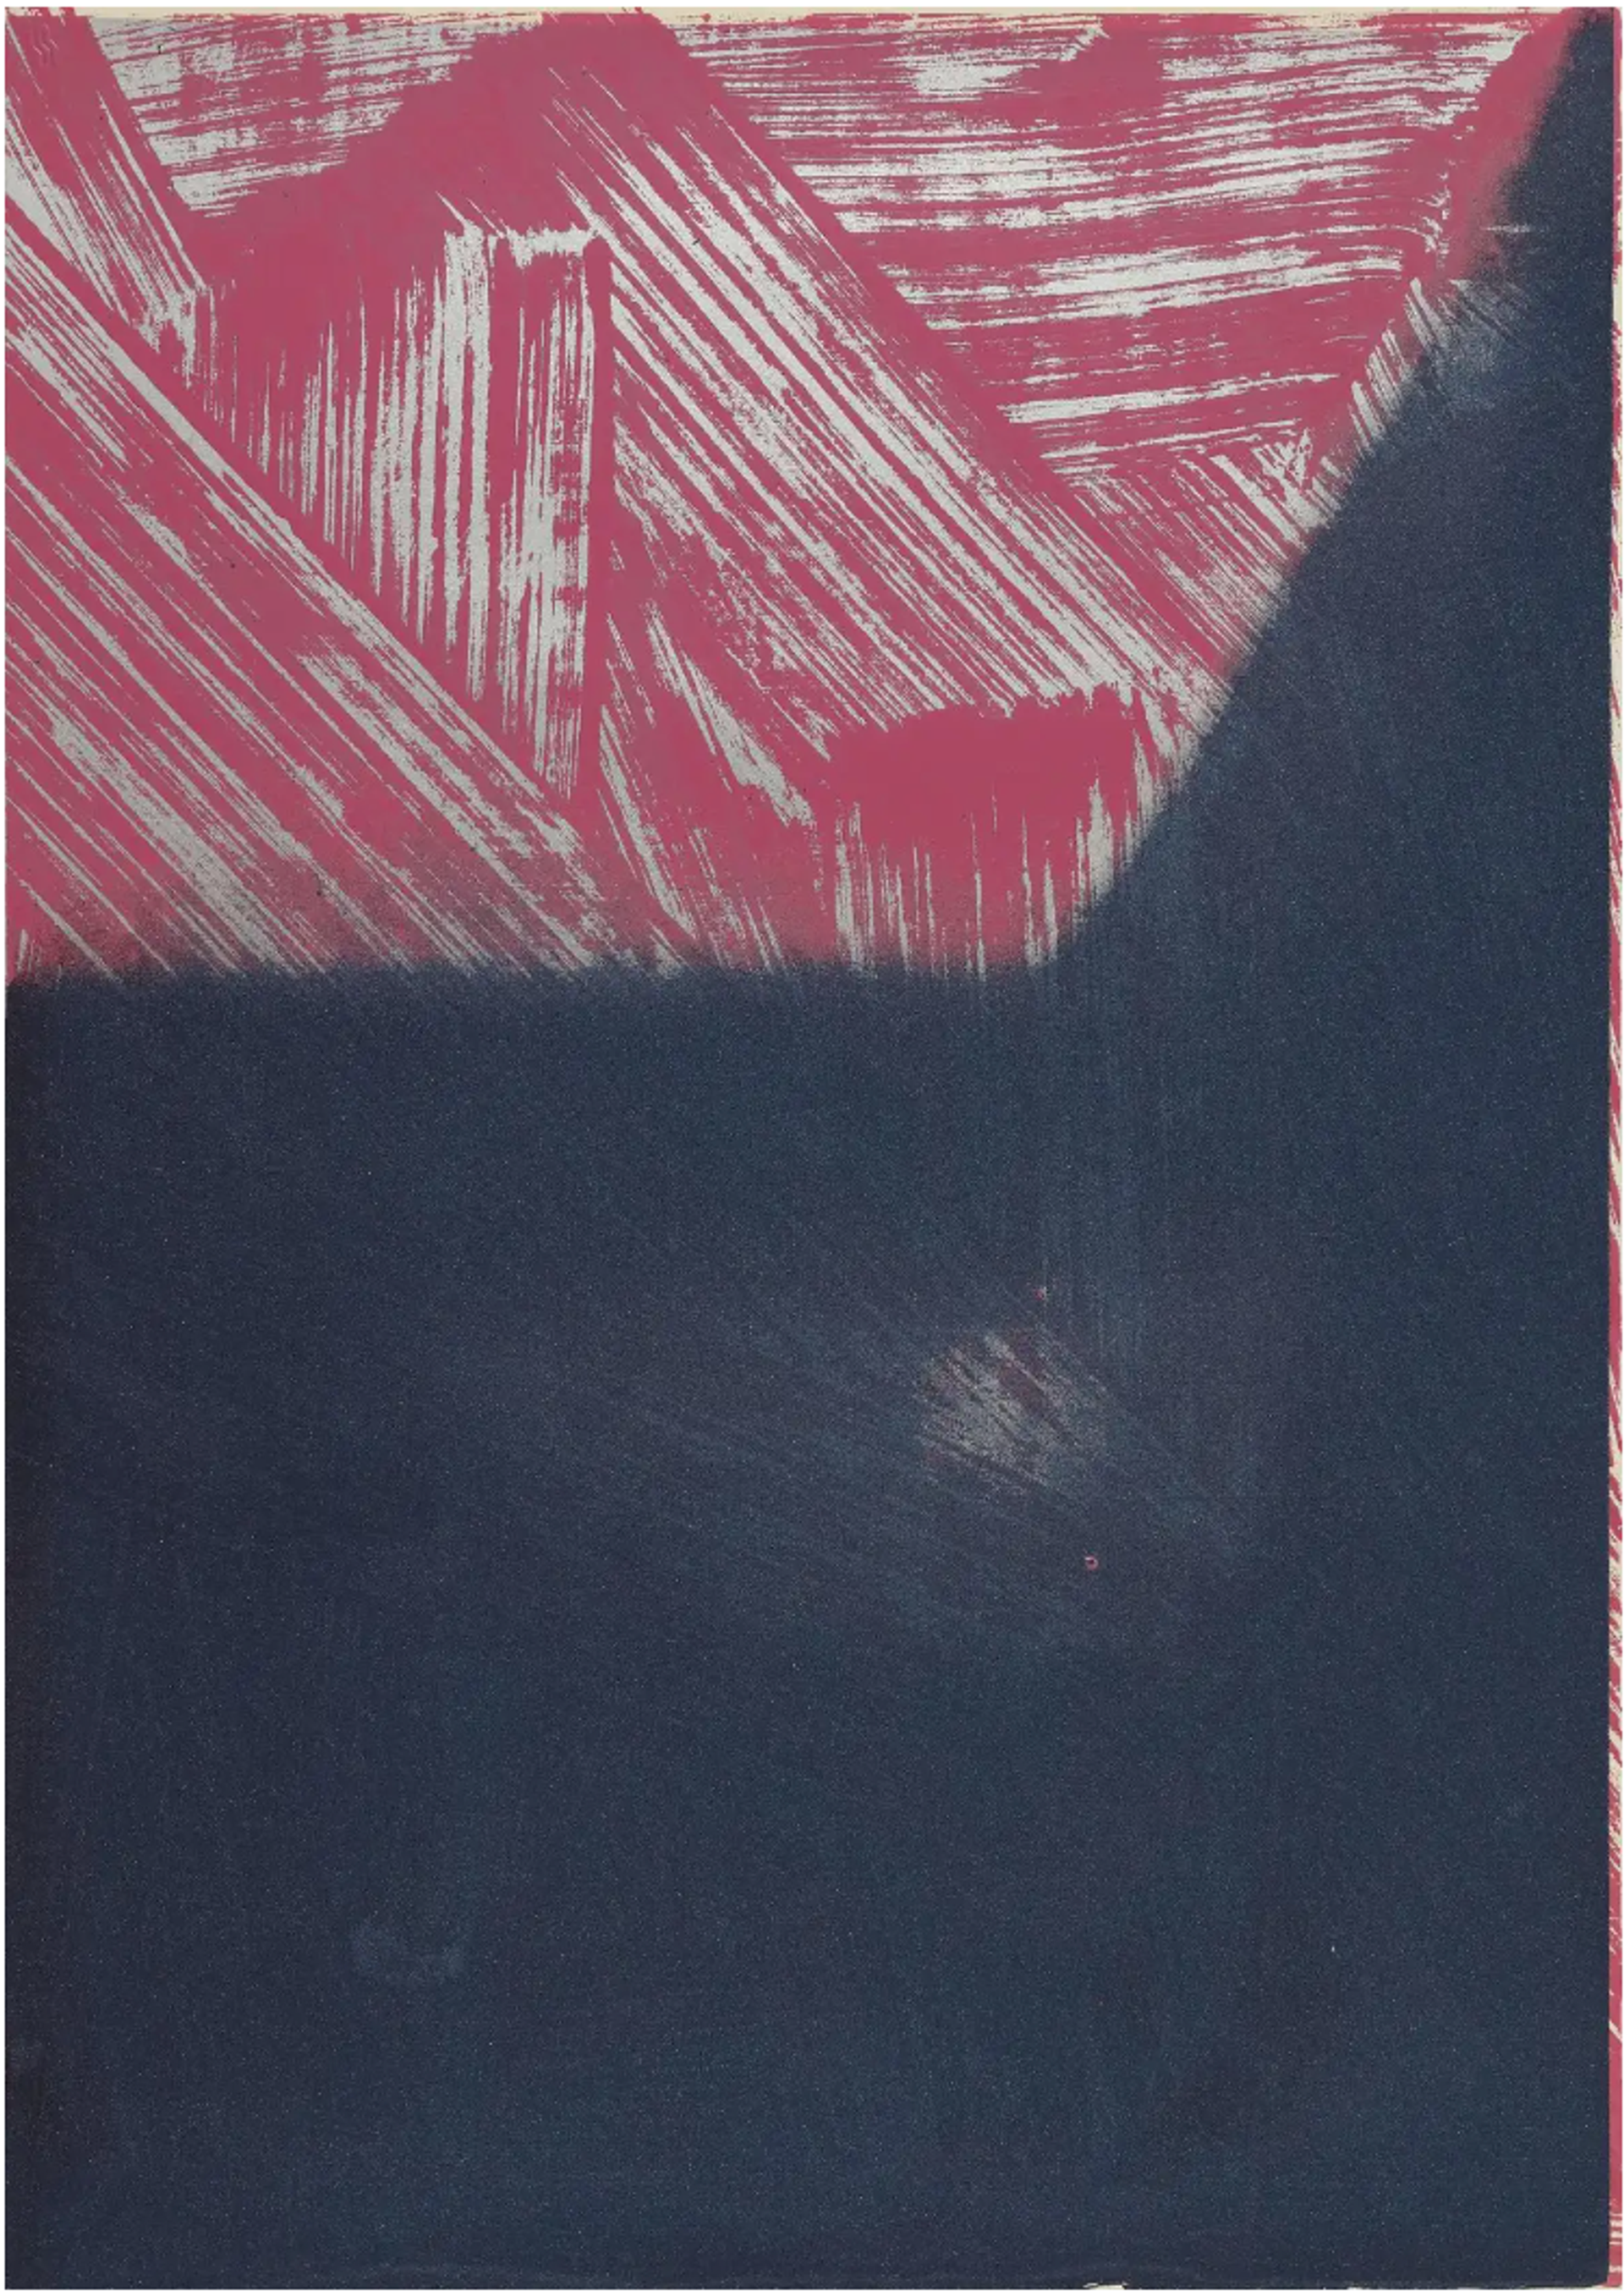 Shadows IV (F. & S. II.230) by Andy Warhol